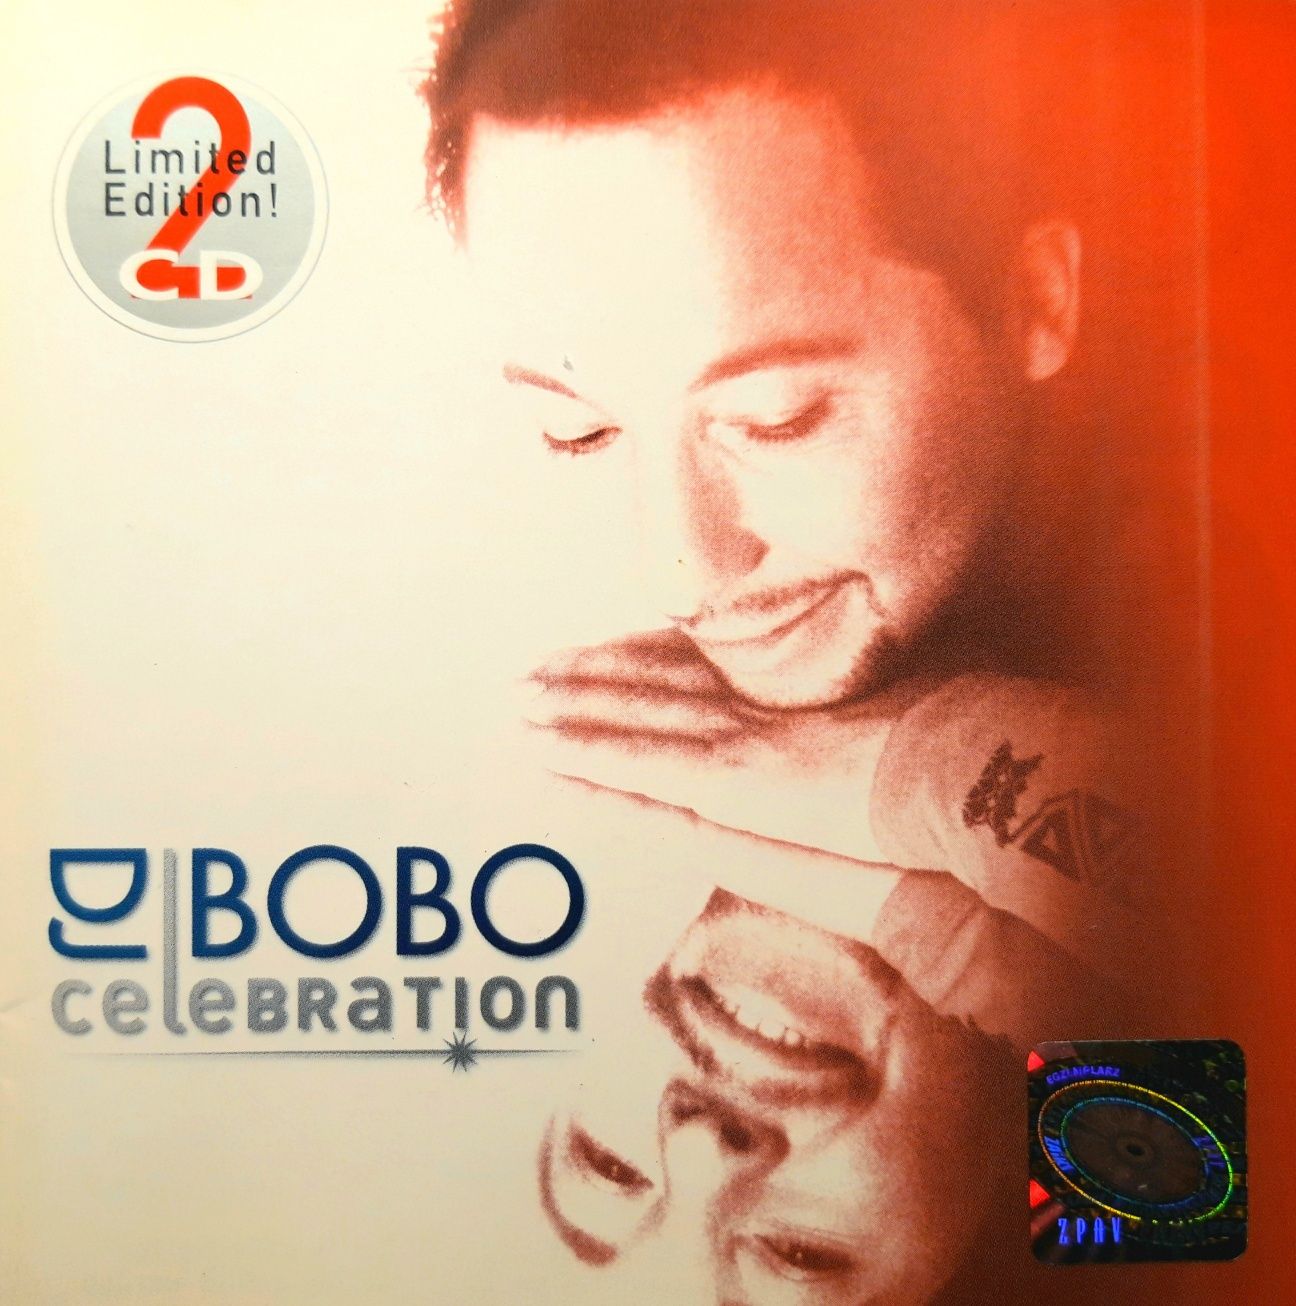 DJ BoBo ‎– Celebration (Limited Edition 2CD) 2xCD, 2002